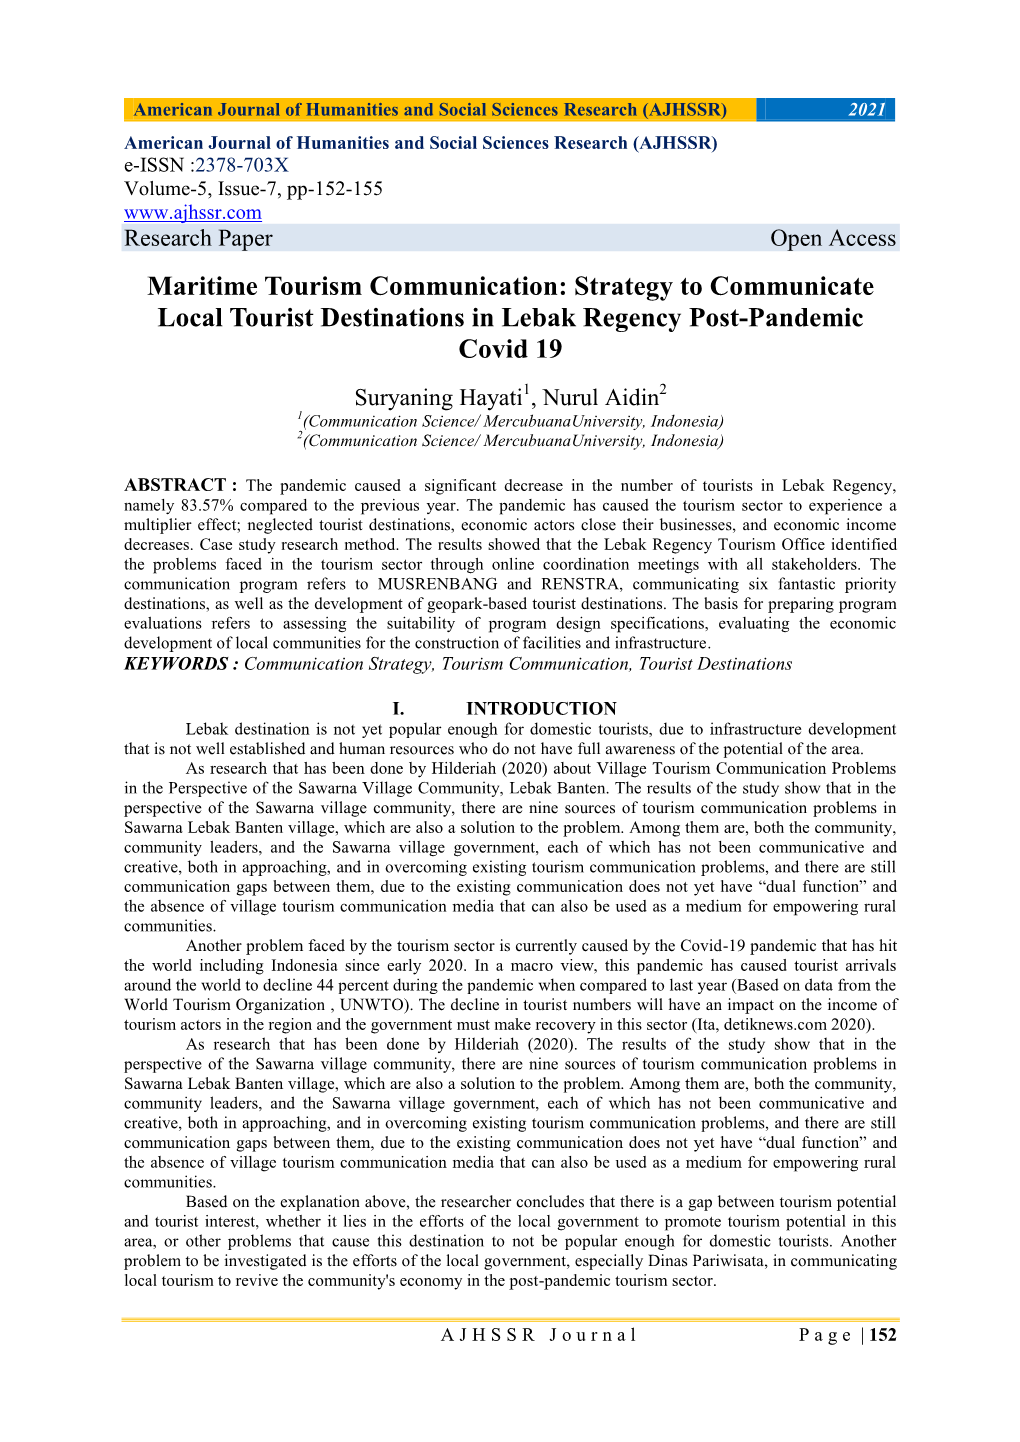 Maritime Tourism Communication: Strategy to Communicate Local Tourist Destinations in Lebak Regency Post-Pandemic Covid 19